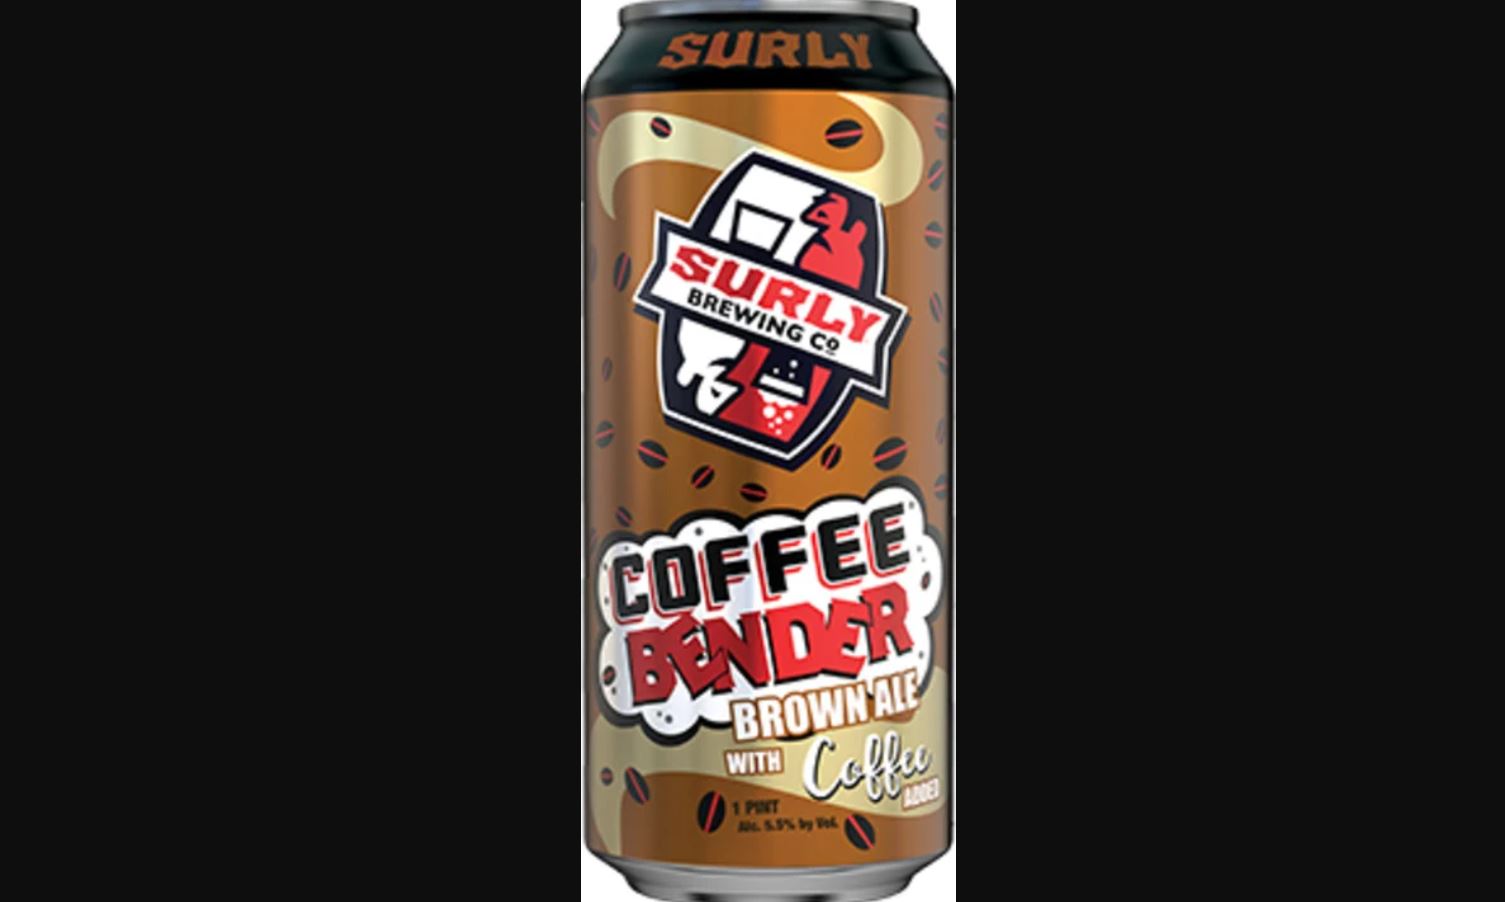 Surly Coffee Bender